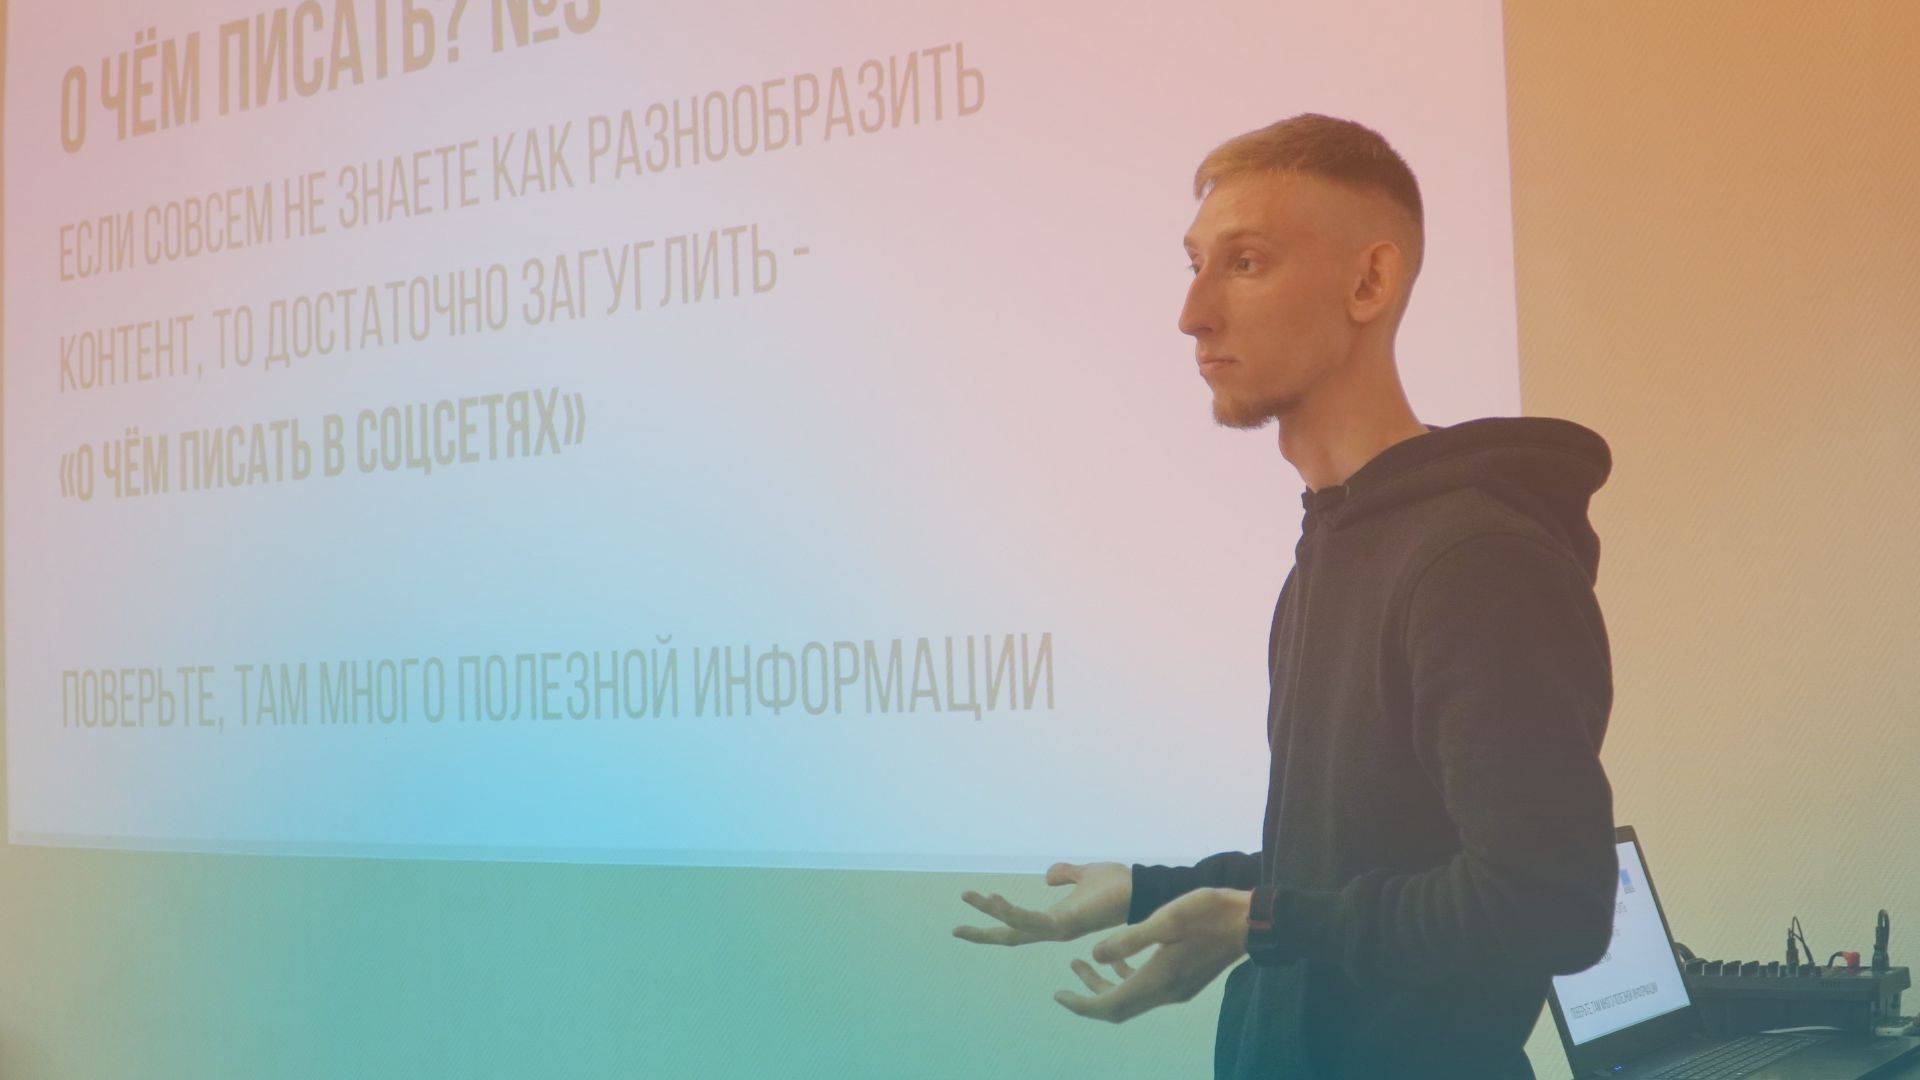 Провели семинар по работе в соцсетях совместно с библиотекой Новосибирска